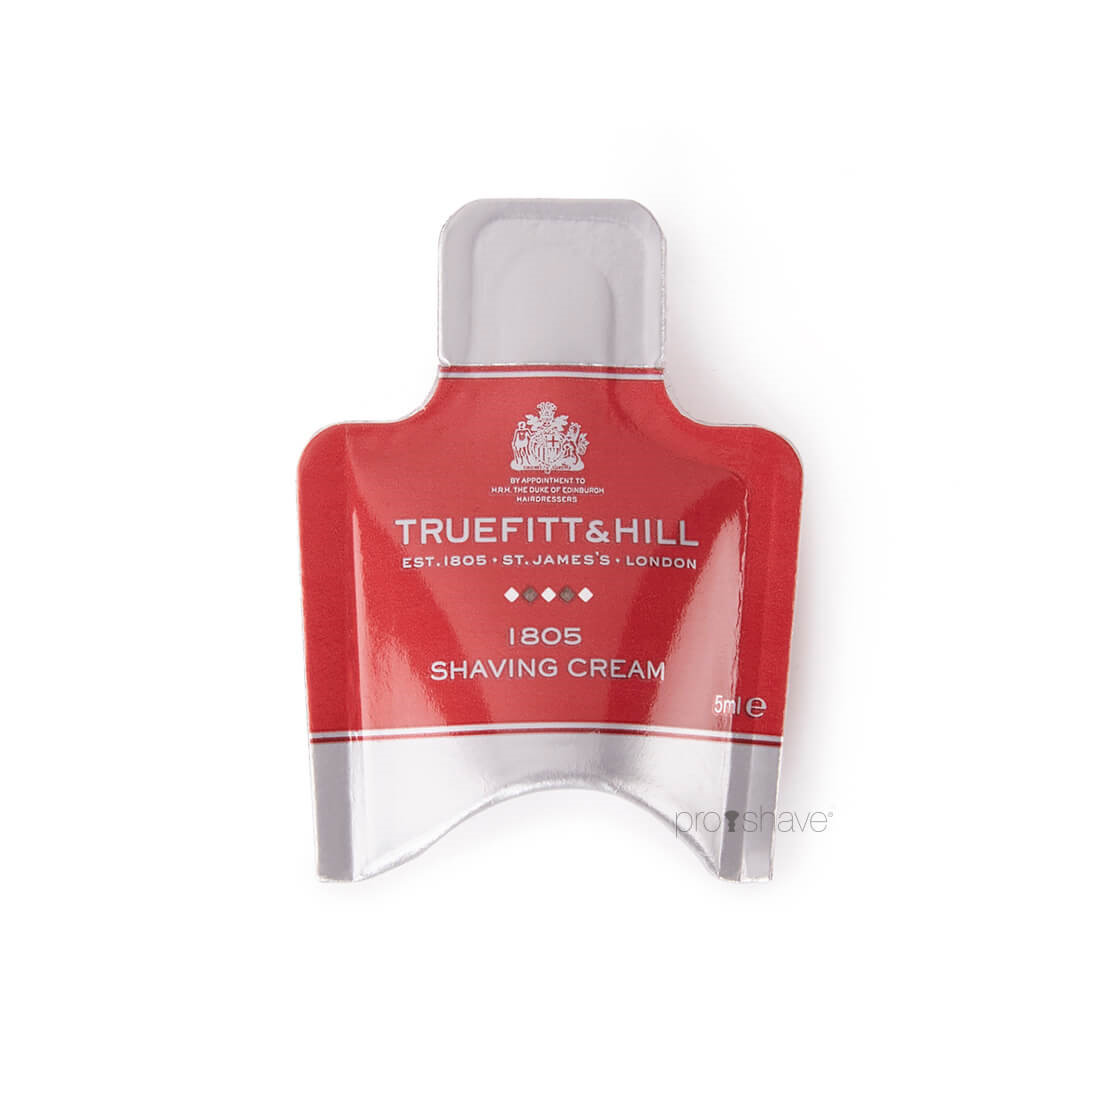 Billede af Truefitt & Hill 1805 Shaving Cream Sample Pack, 5 ml.